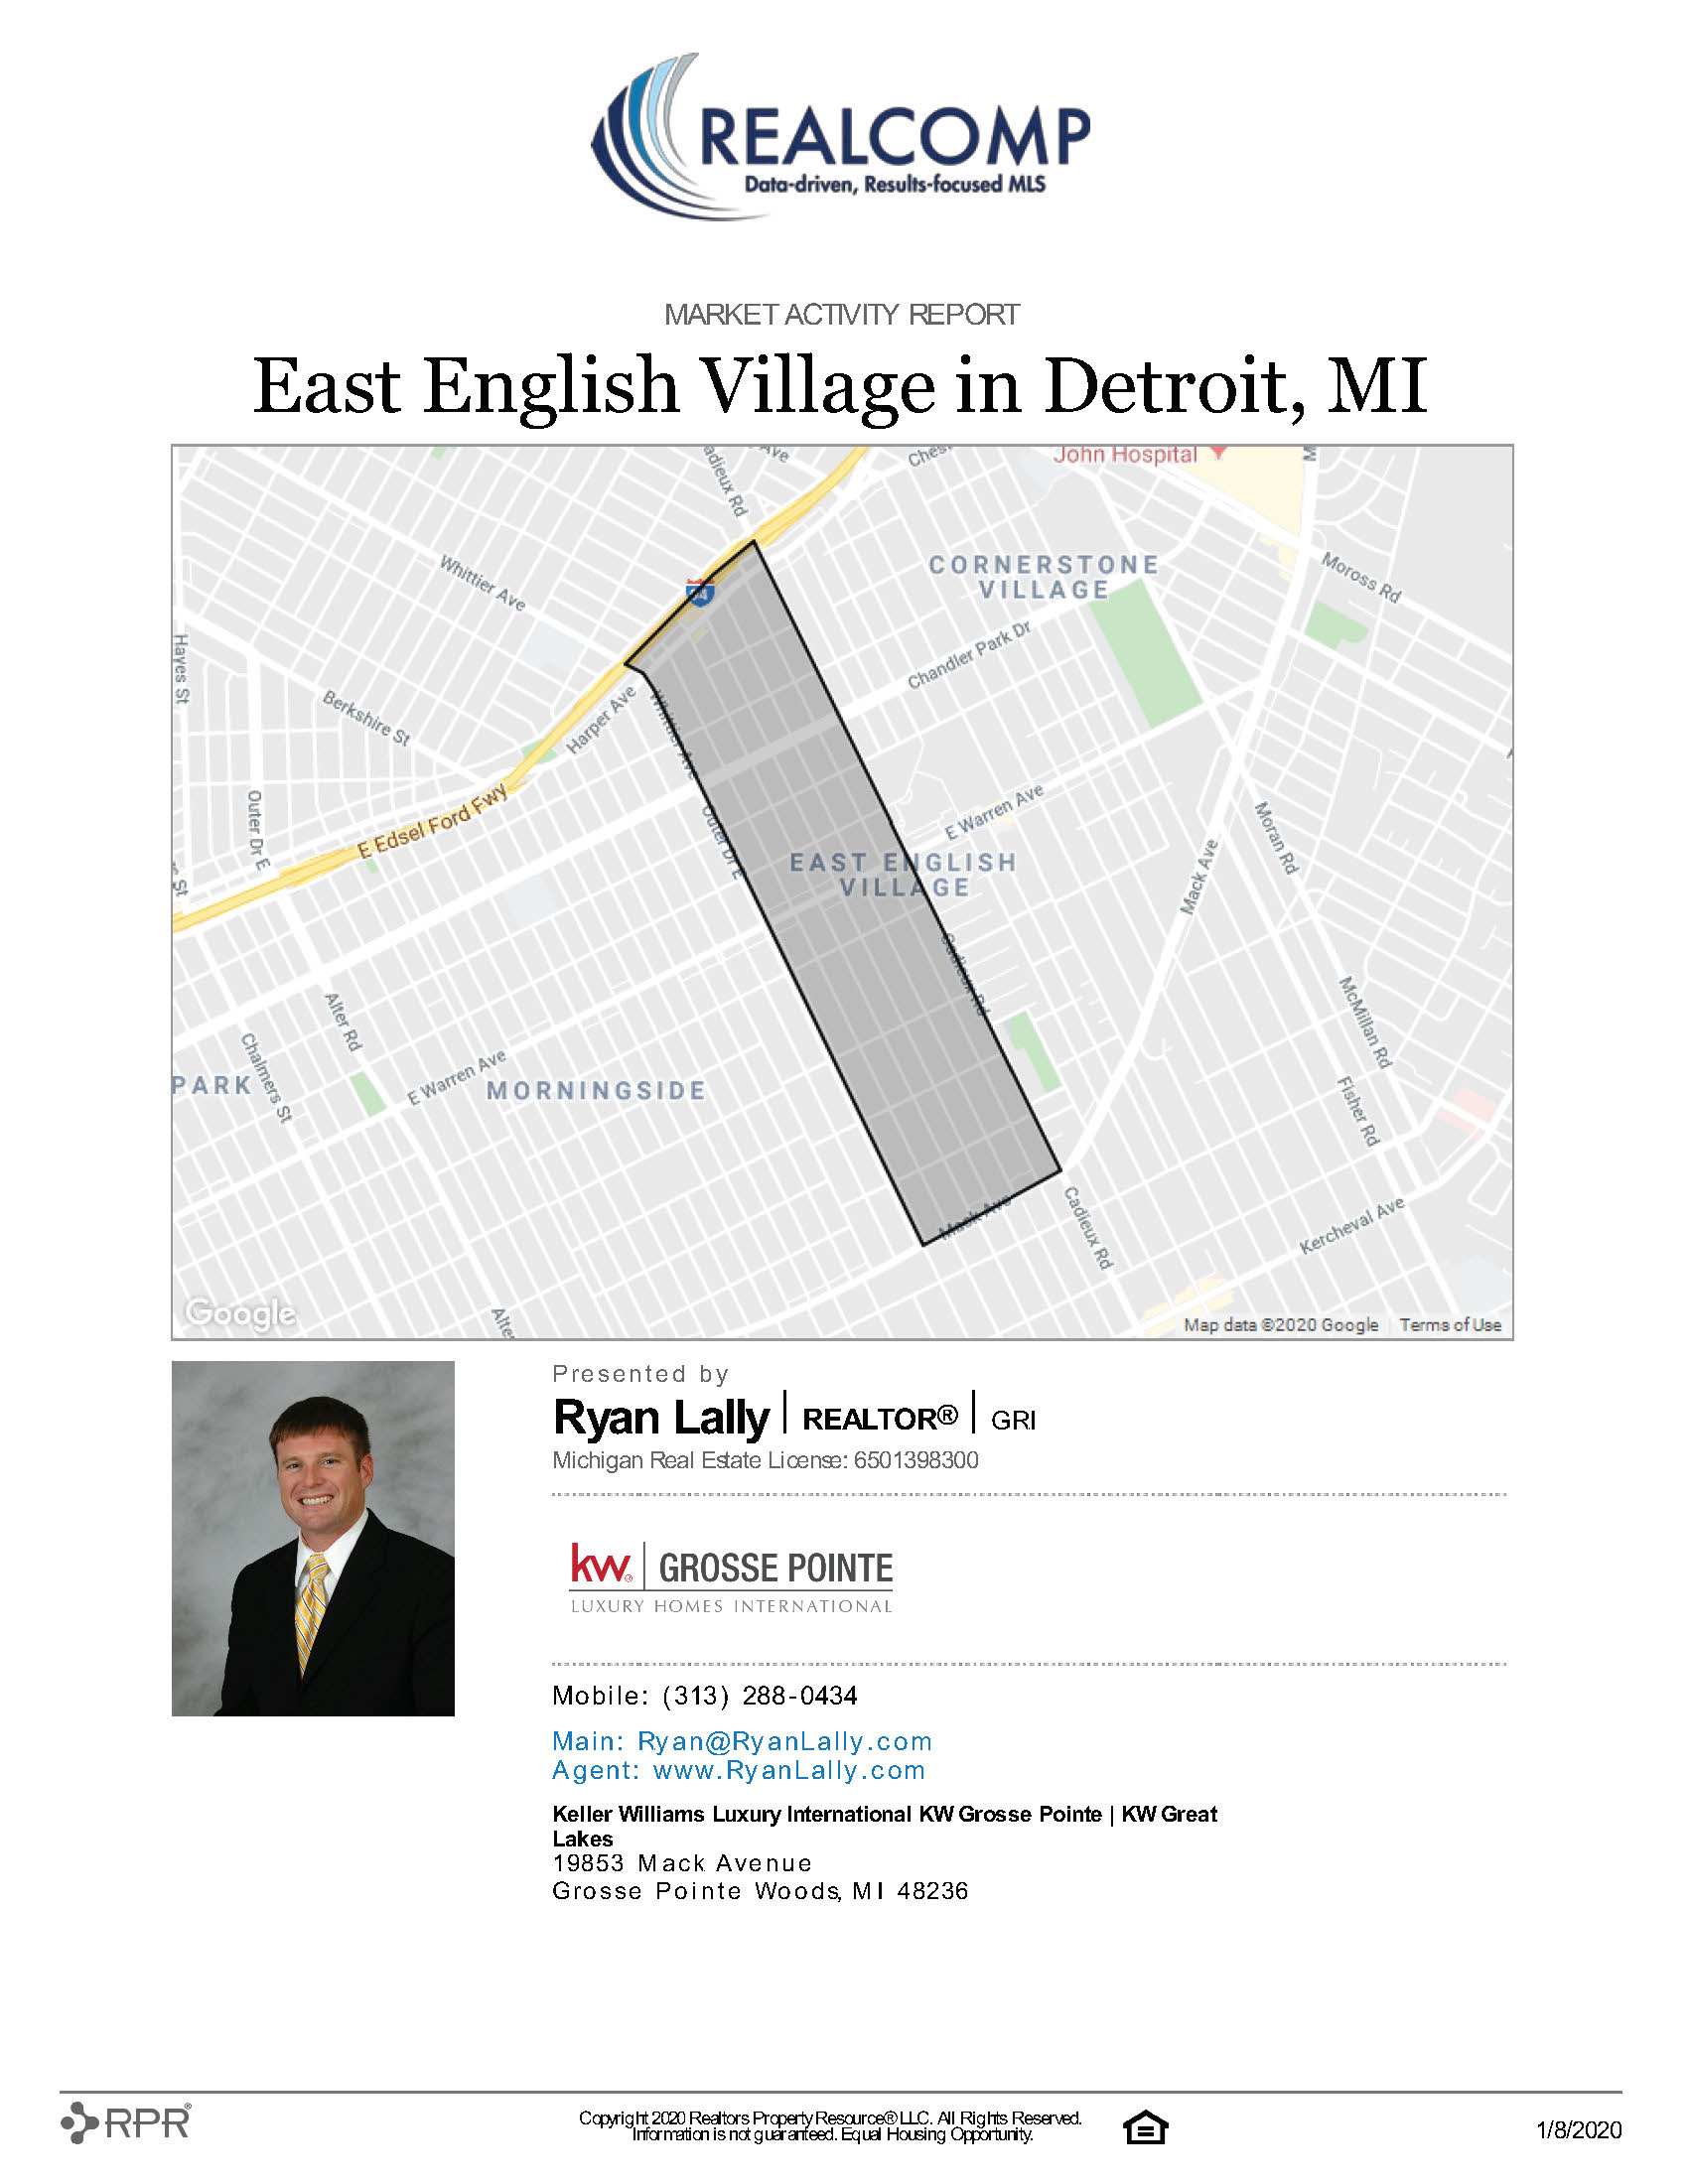 Market-Activity-Report_East-English-Village-in-Detroit-MI_2020-01-08-18-38-24_Page_01.jpg